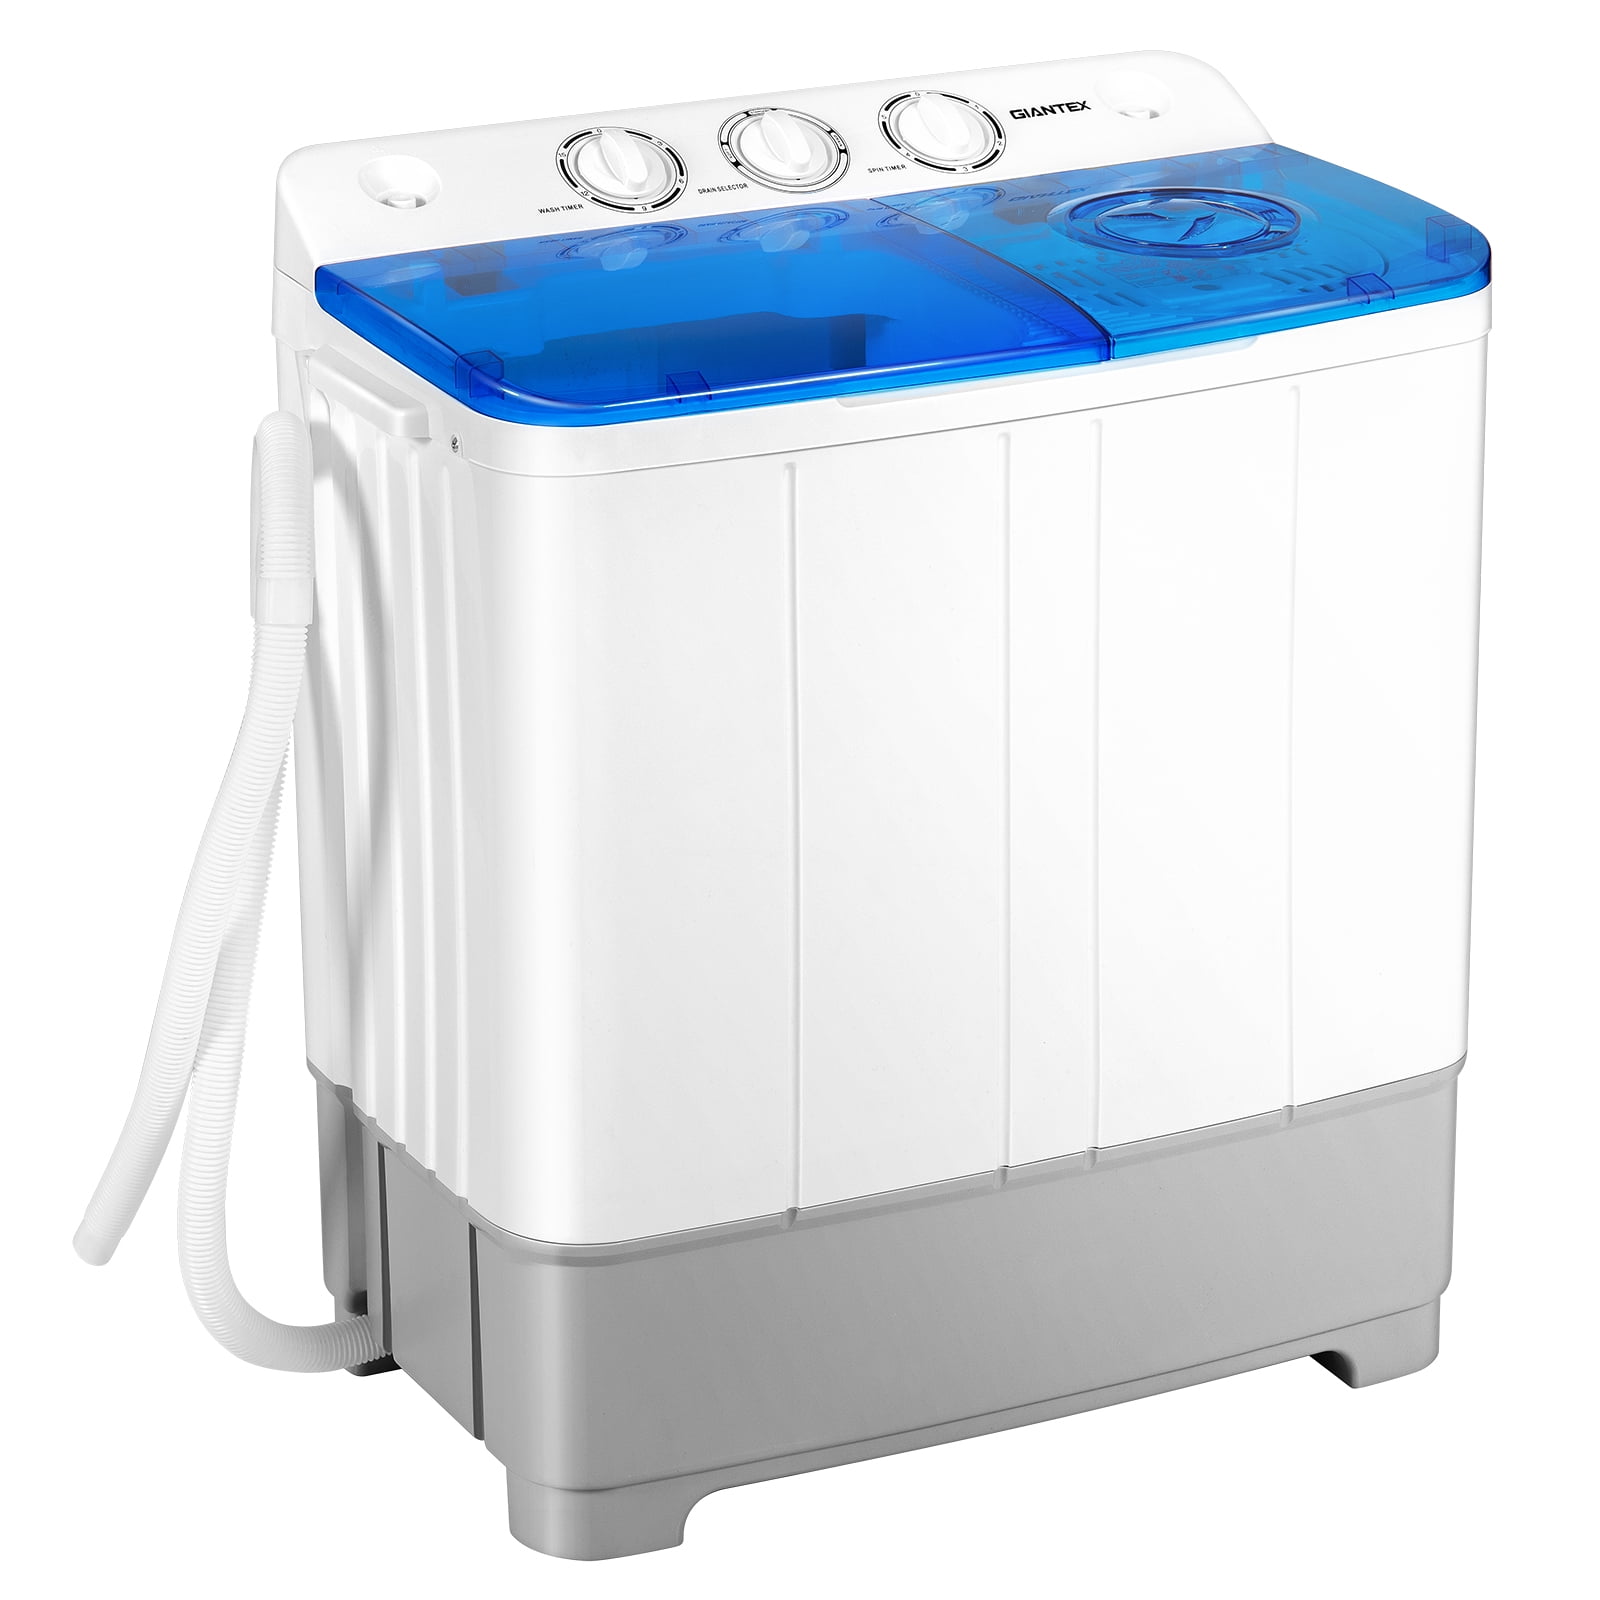 Giantex Portable Twin Tub Mini Washing Machine Washer 13.2